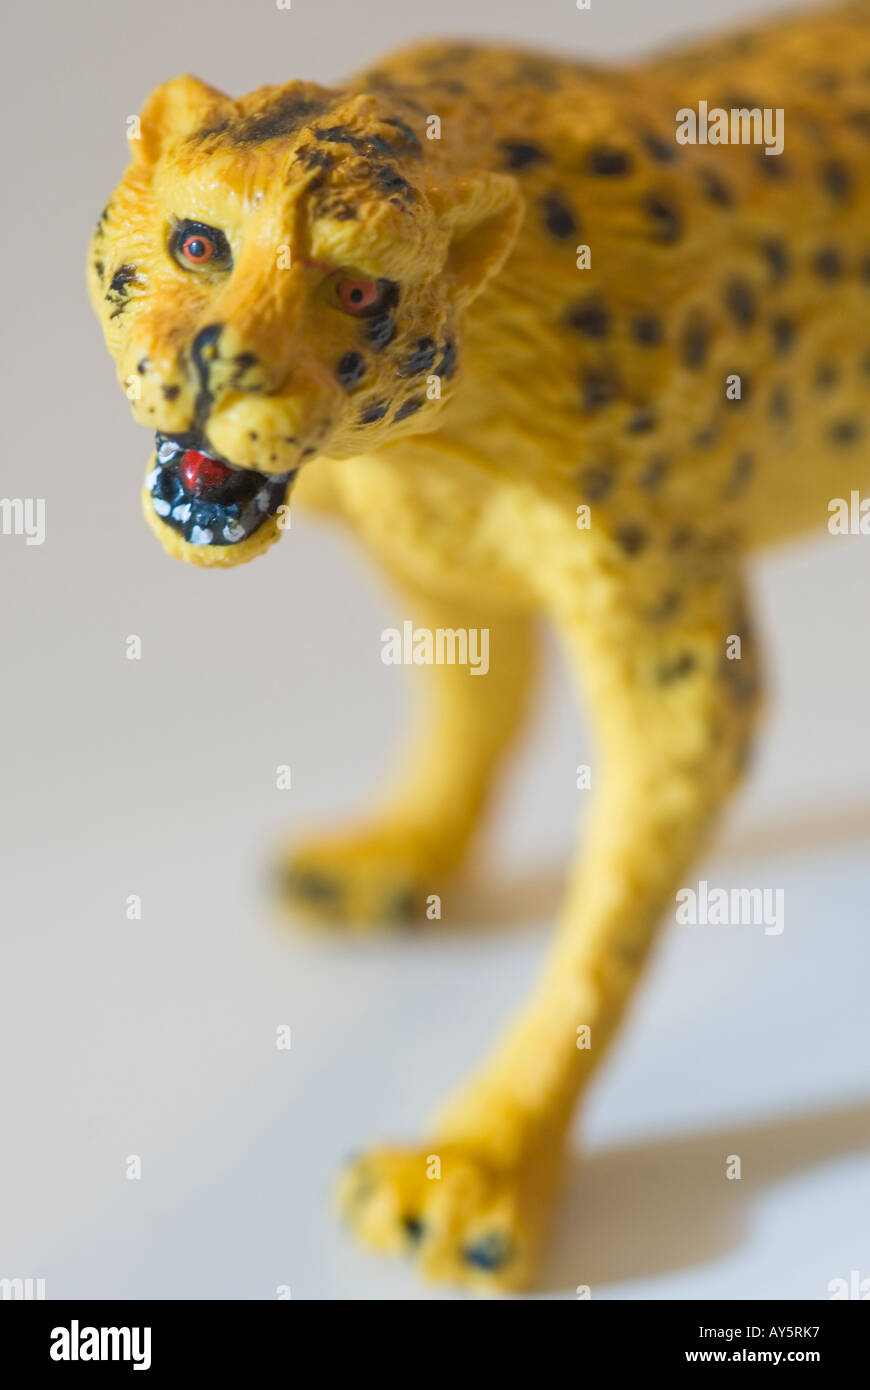 Cheetah Animal Figures, Jaguar Animal Figure, Jaguar Animal Toy